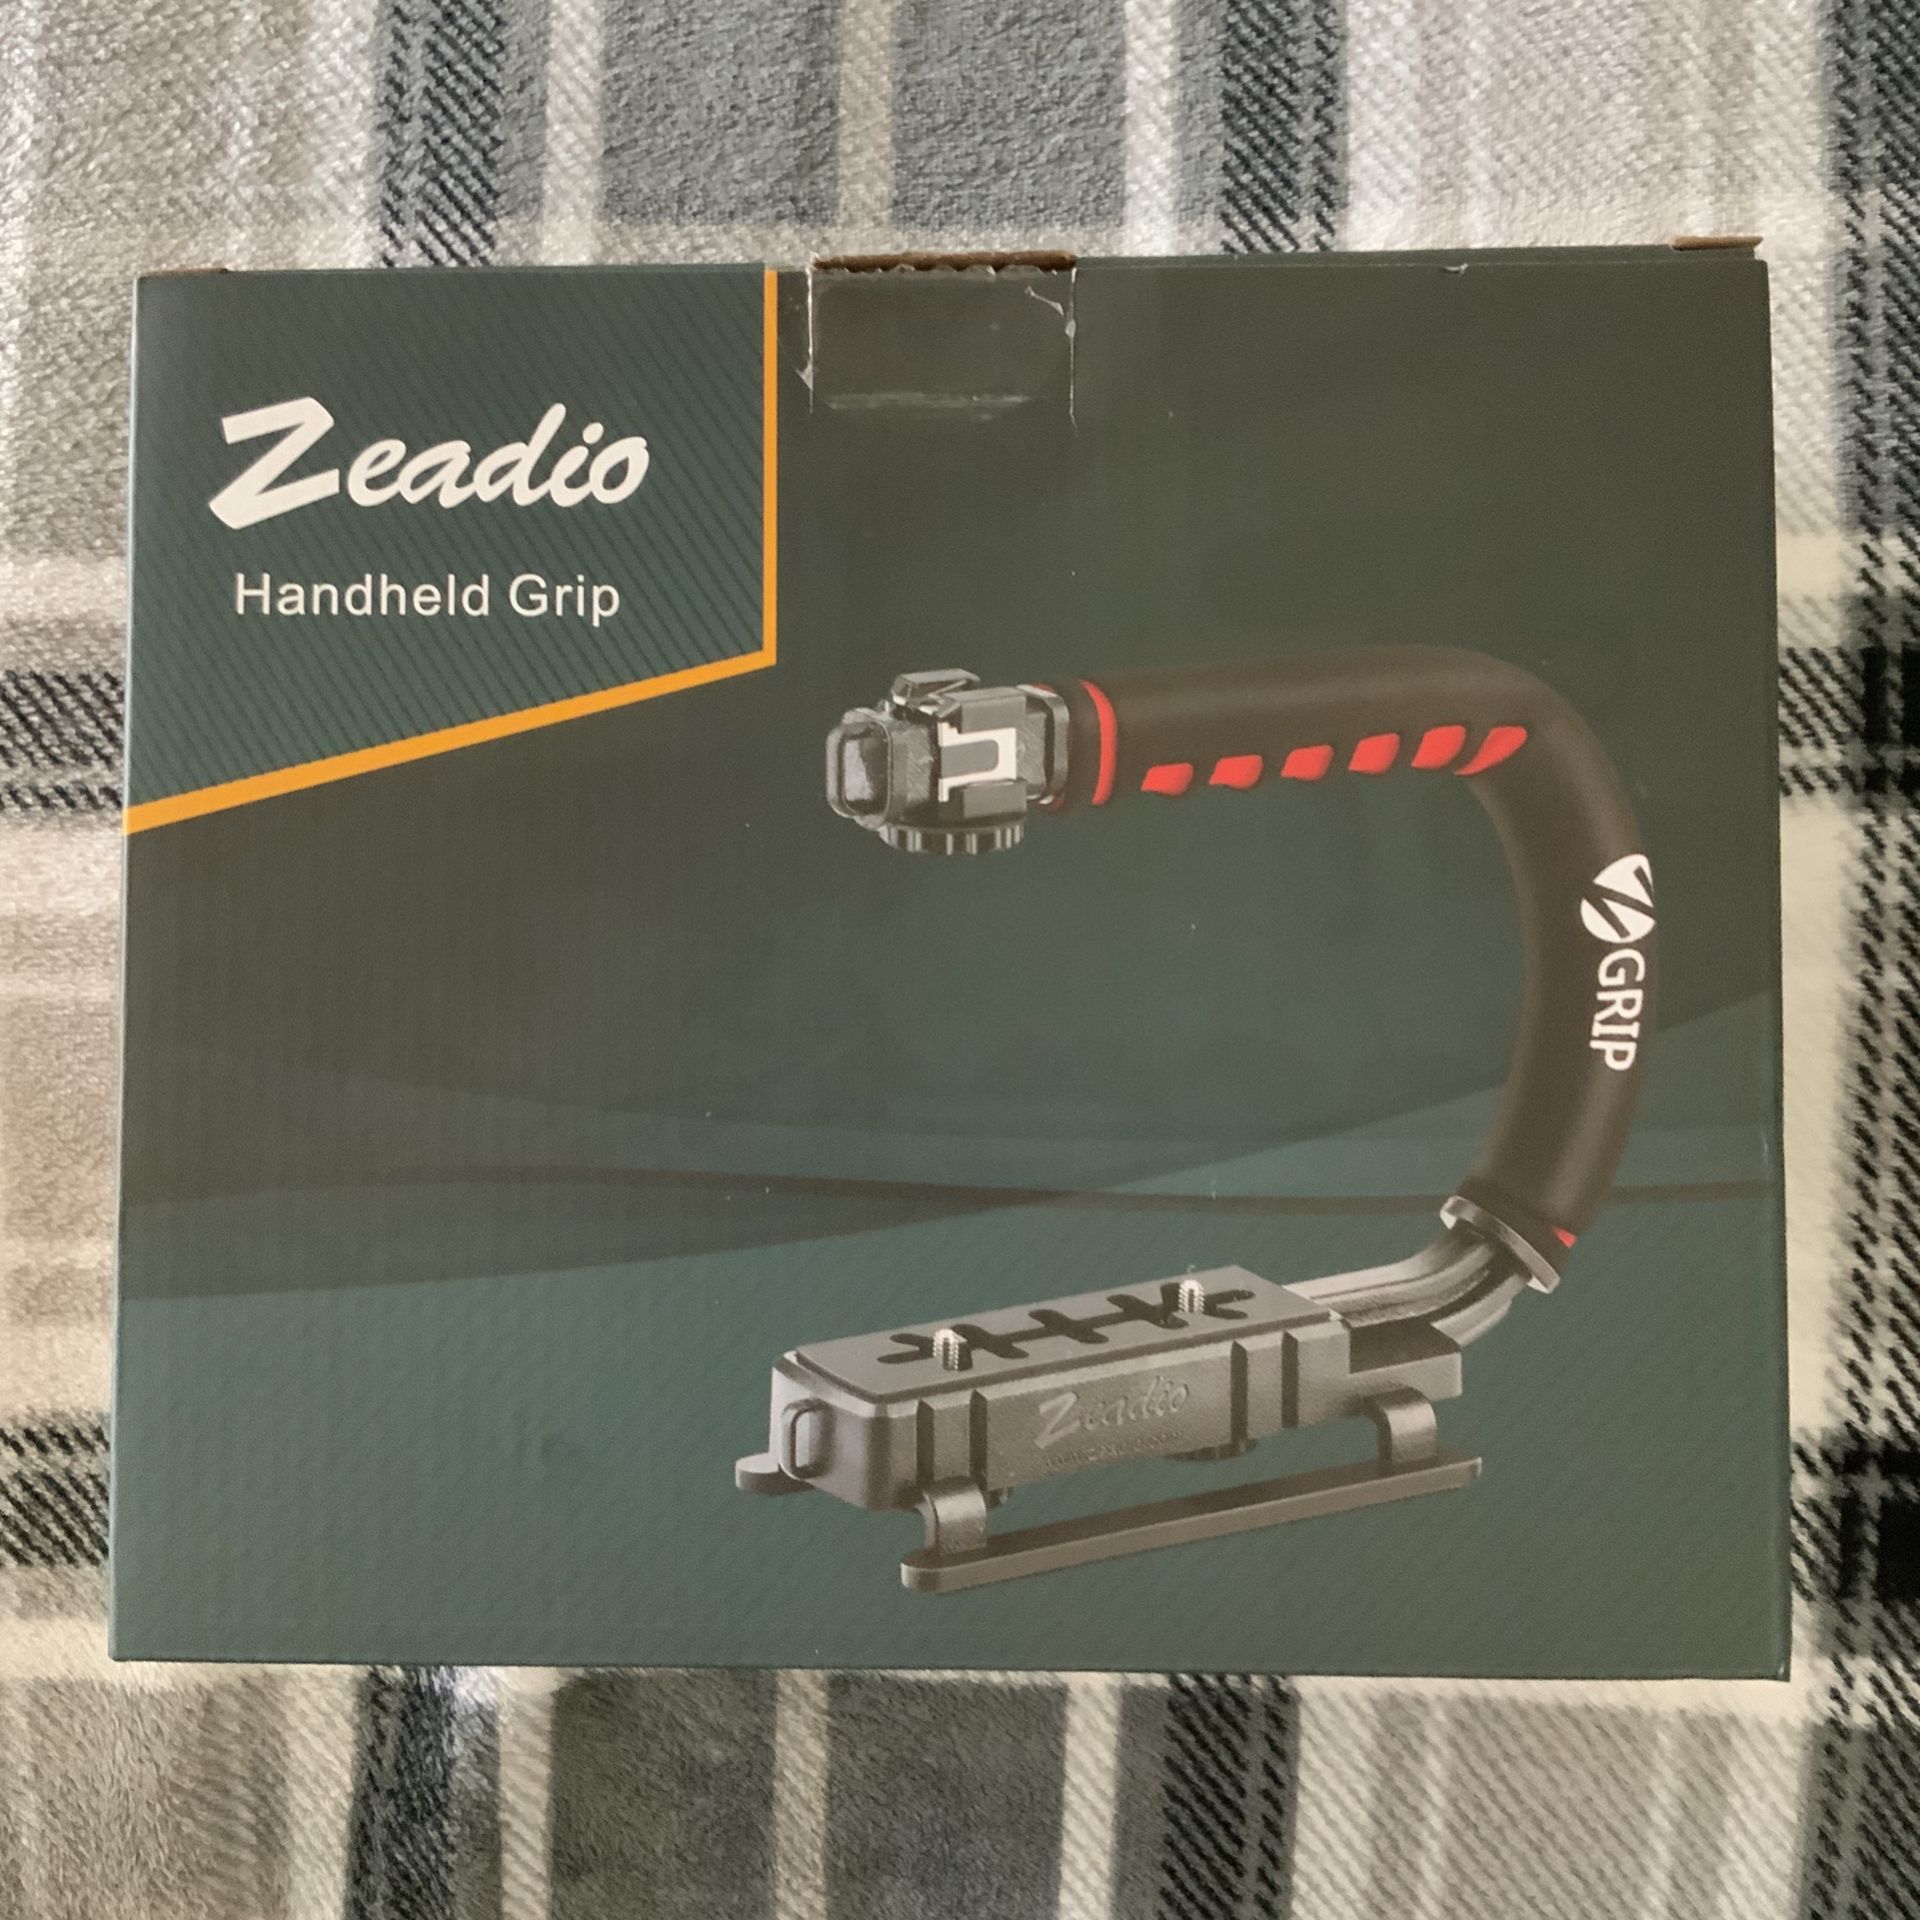 Zeadio Handheld Grip